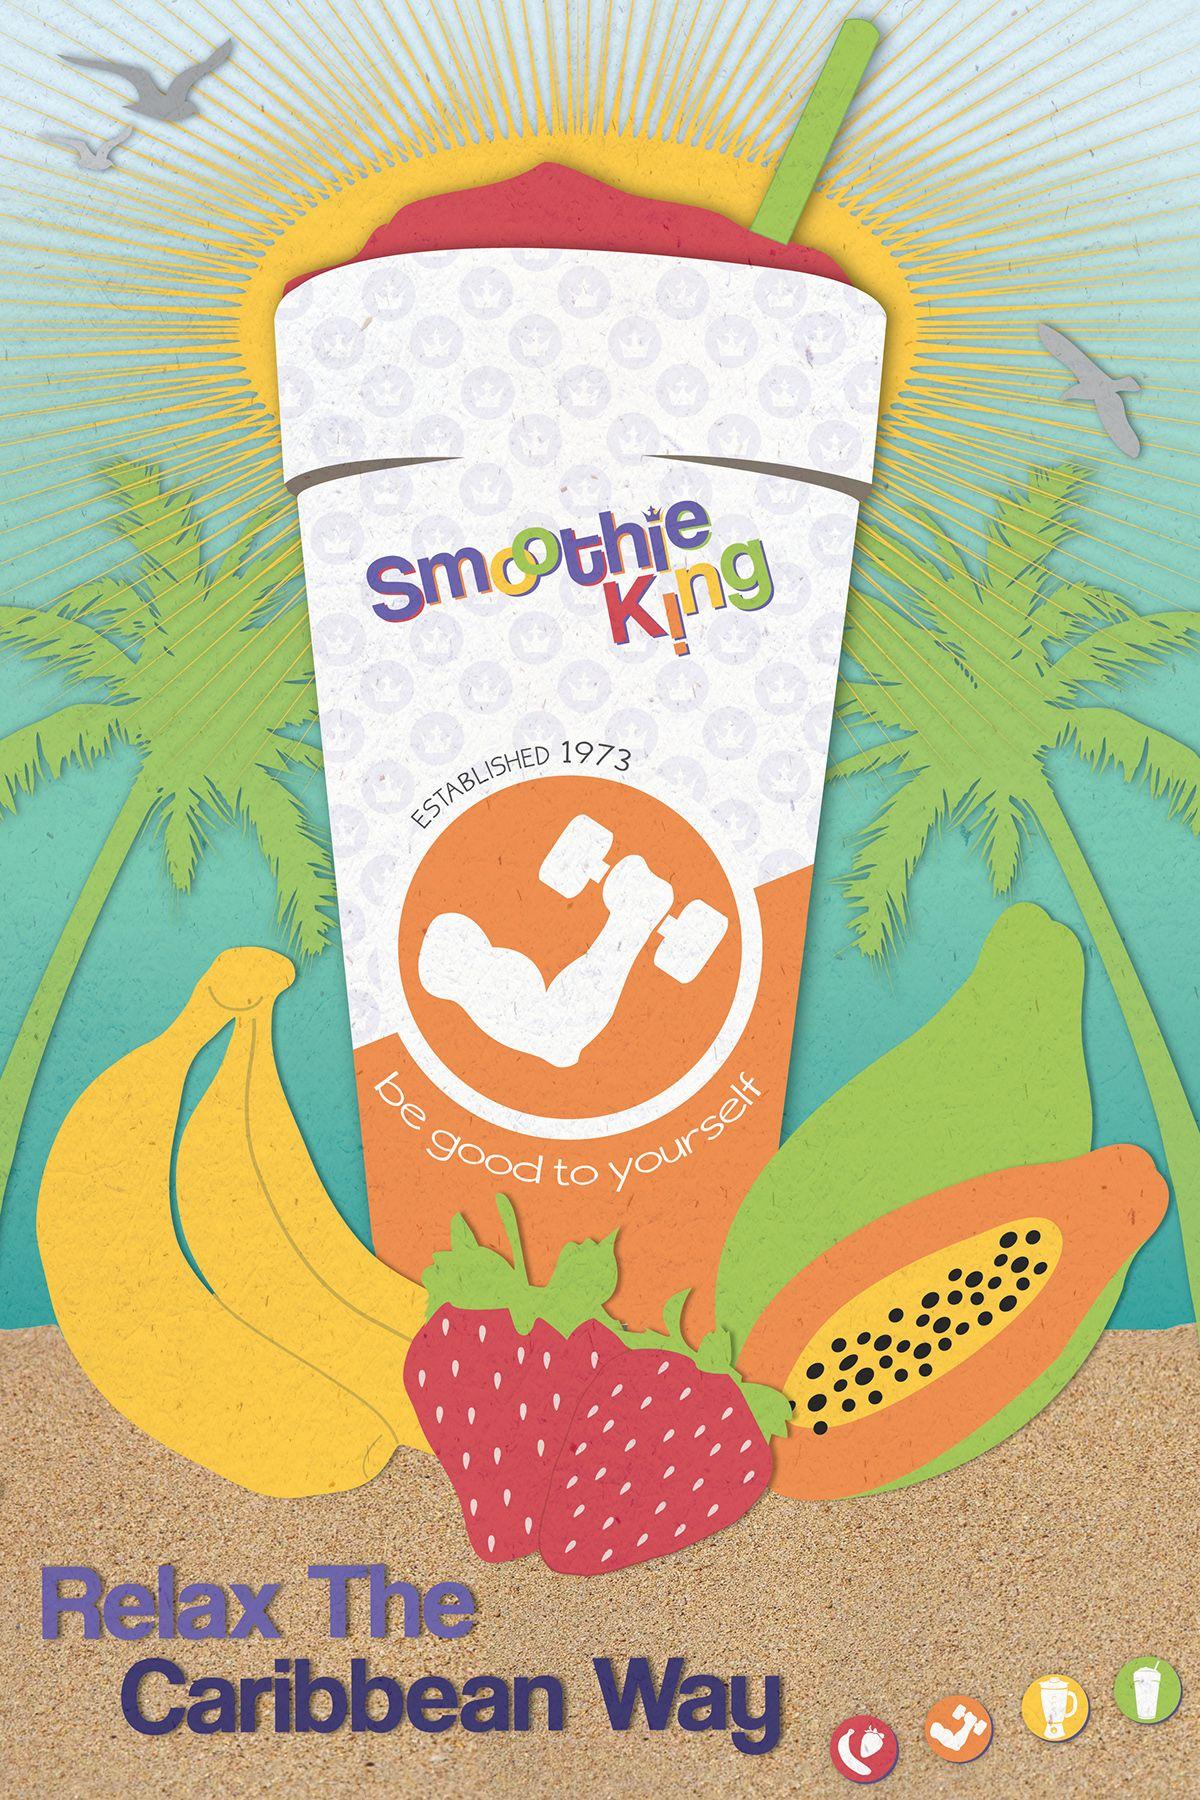 Smoothie King Logo - Redo of Smoothie King Logo and Promotional Poster